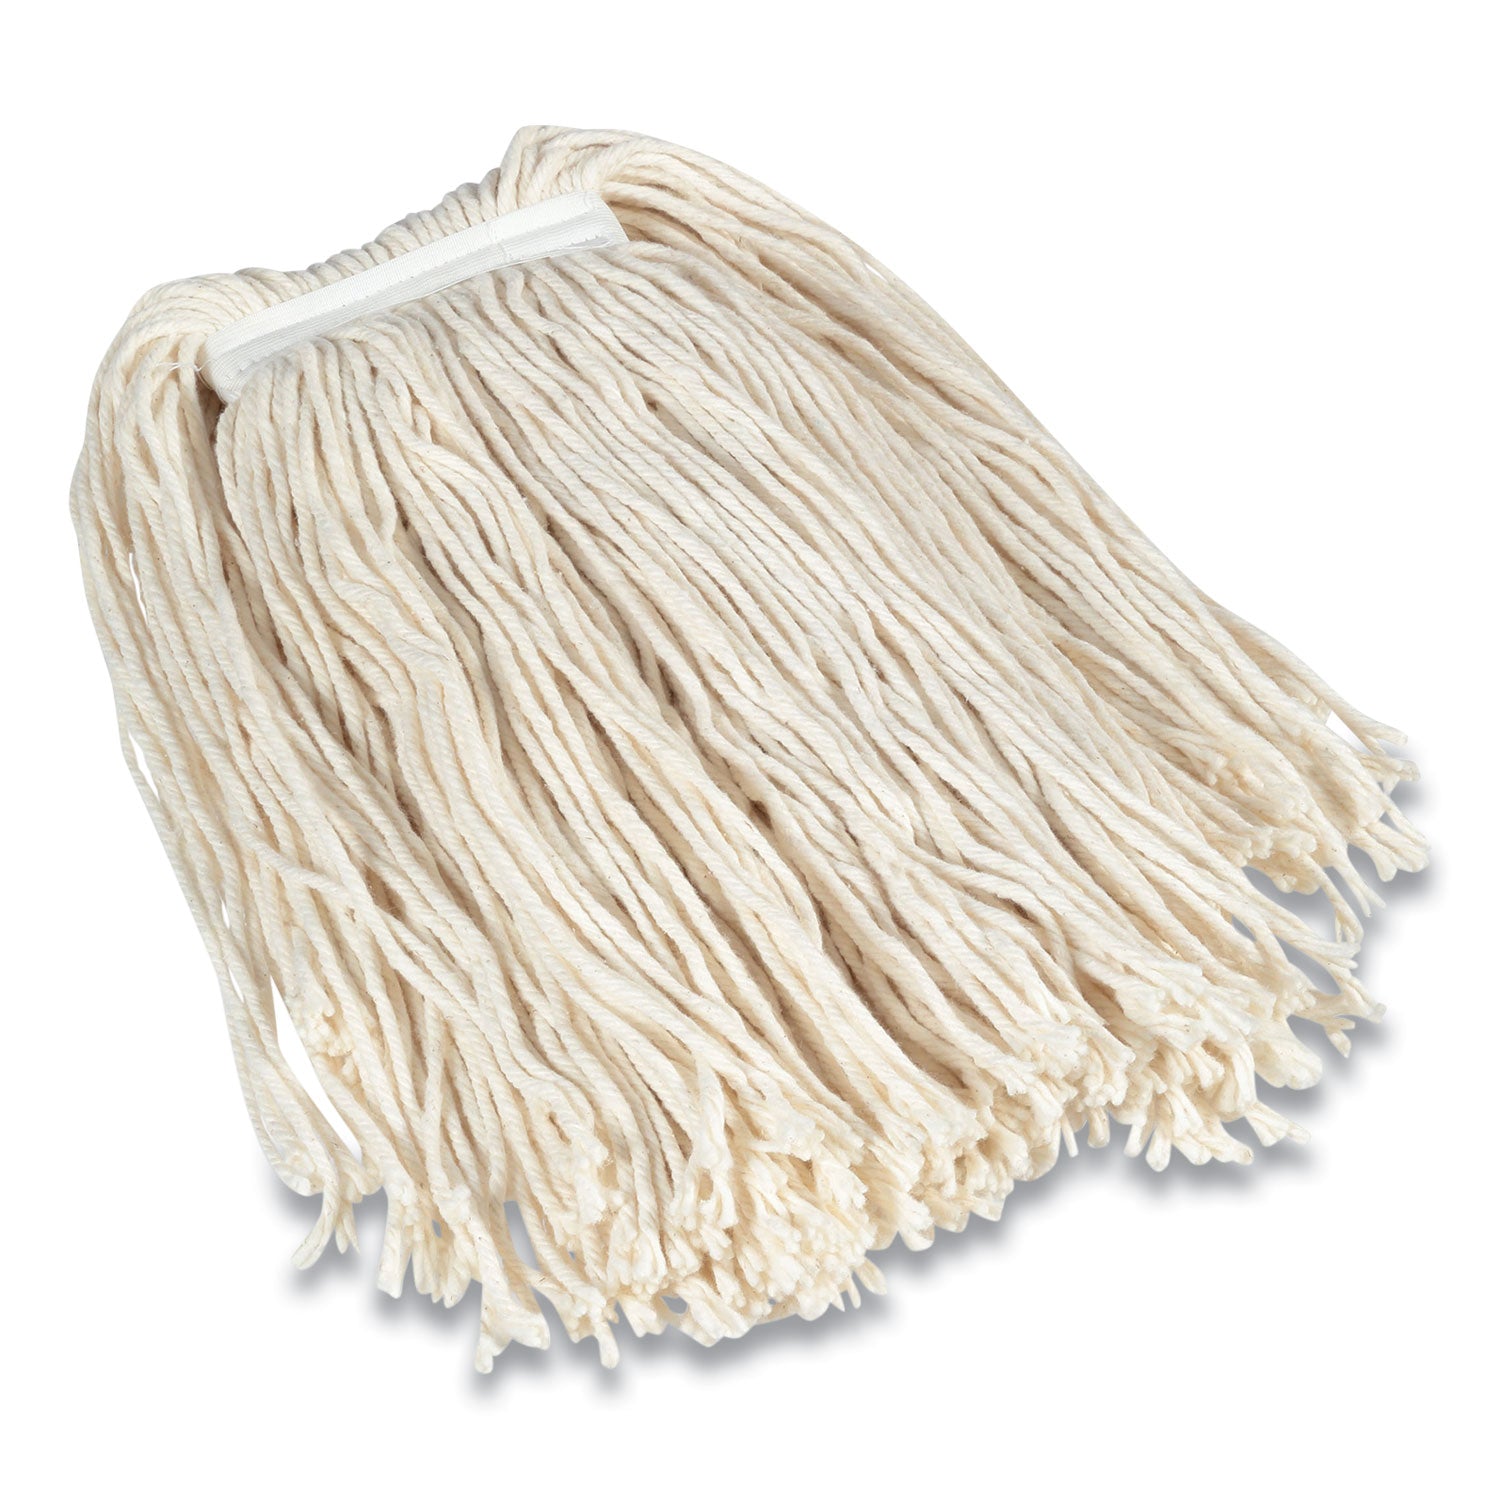 cut-end-wet-mop-head-cotton-#32-1-headband-white_cwz24420790 - 1